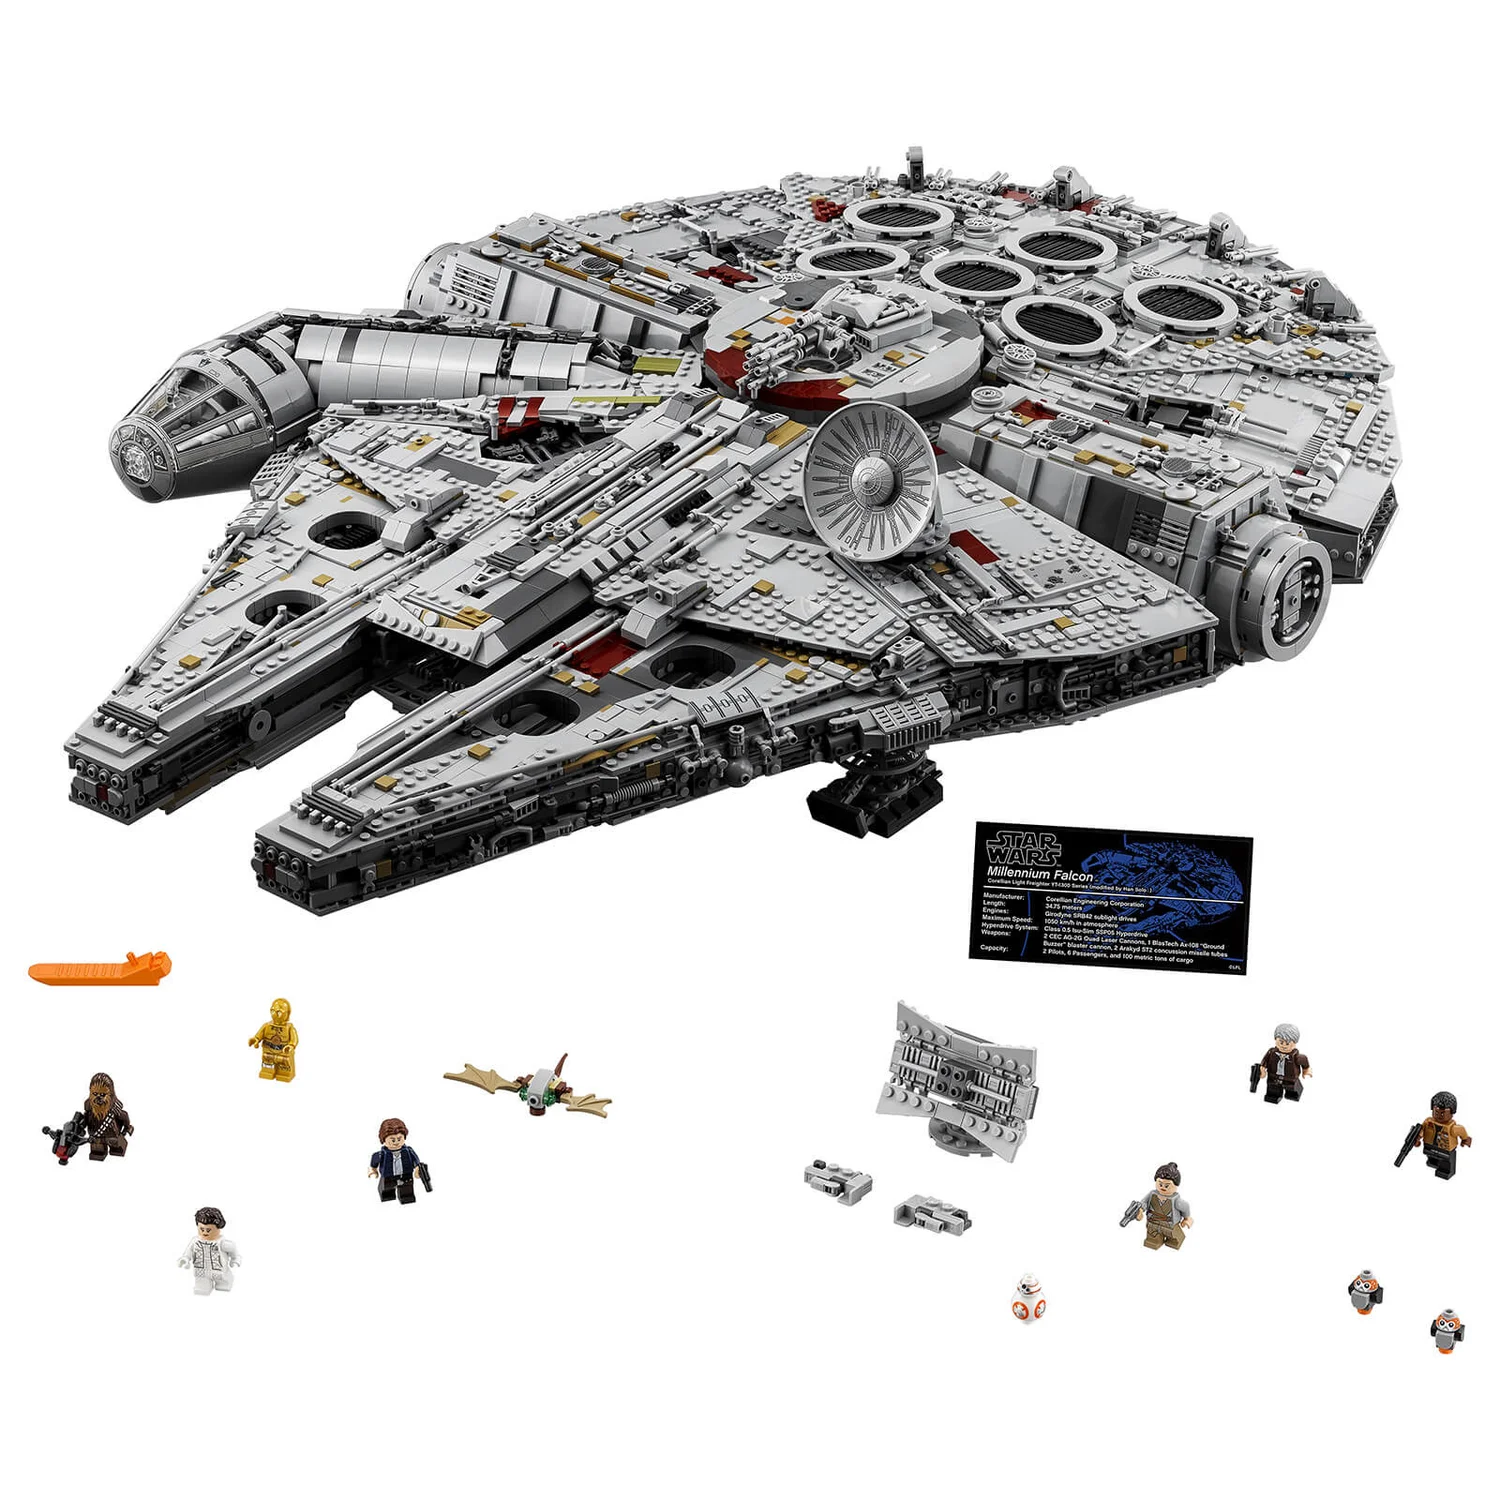 Save a huge £130 on LEGO Star Wars 75192 Millennium Falcon